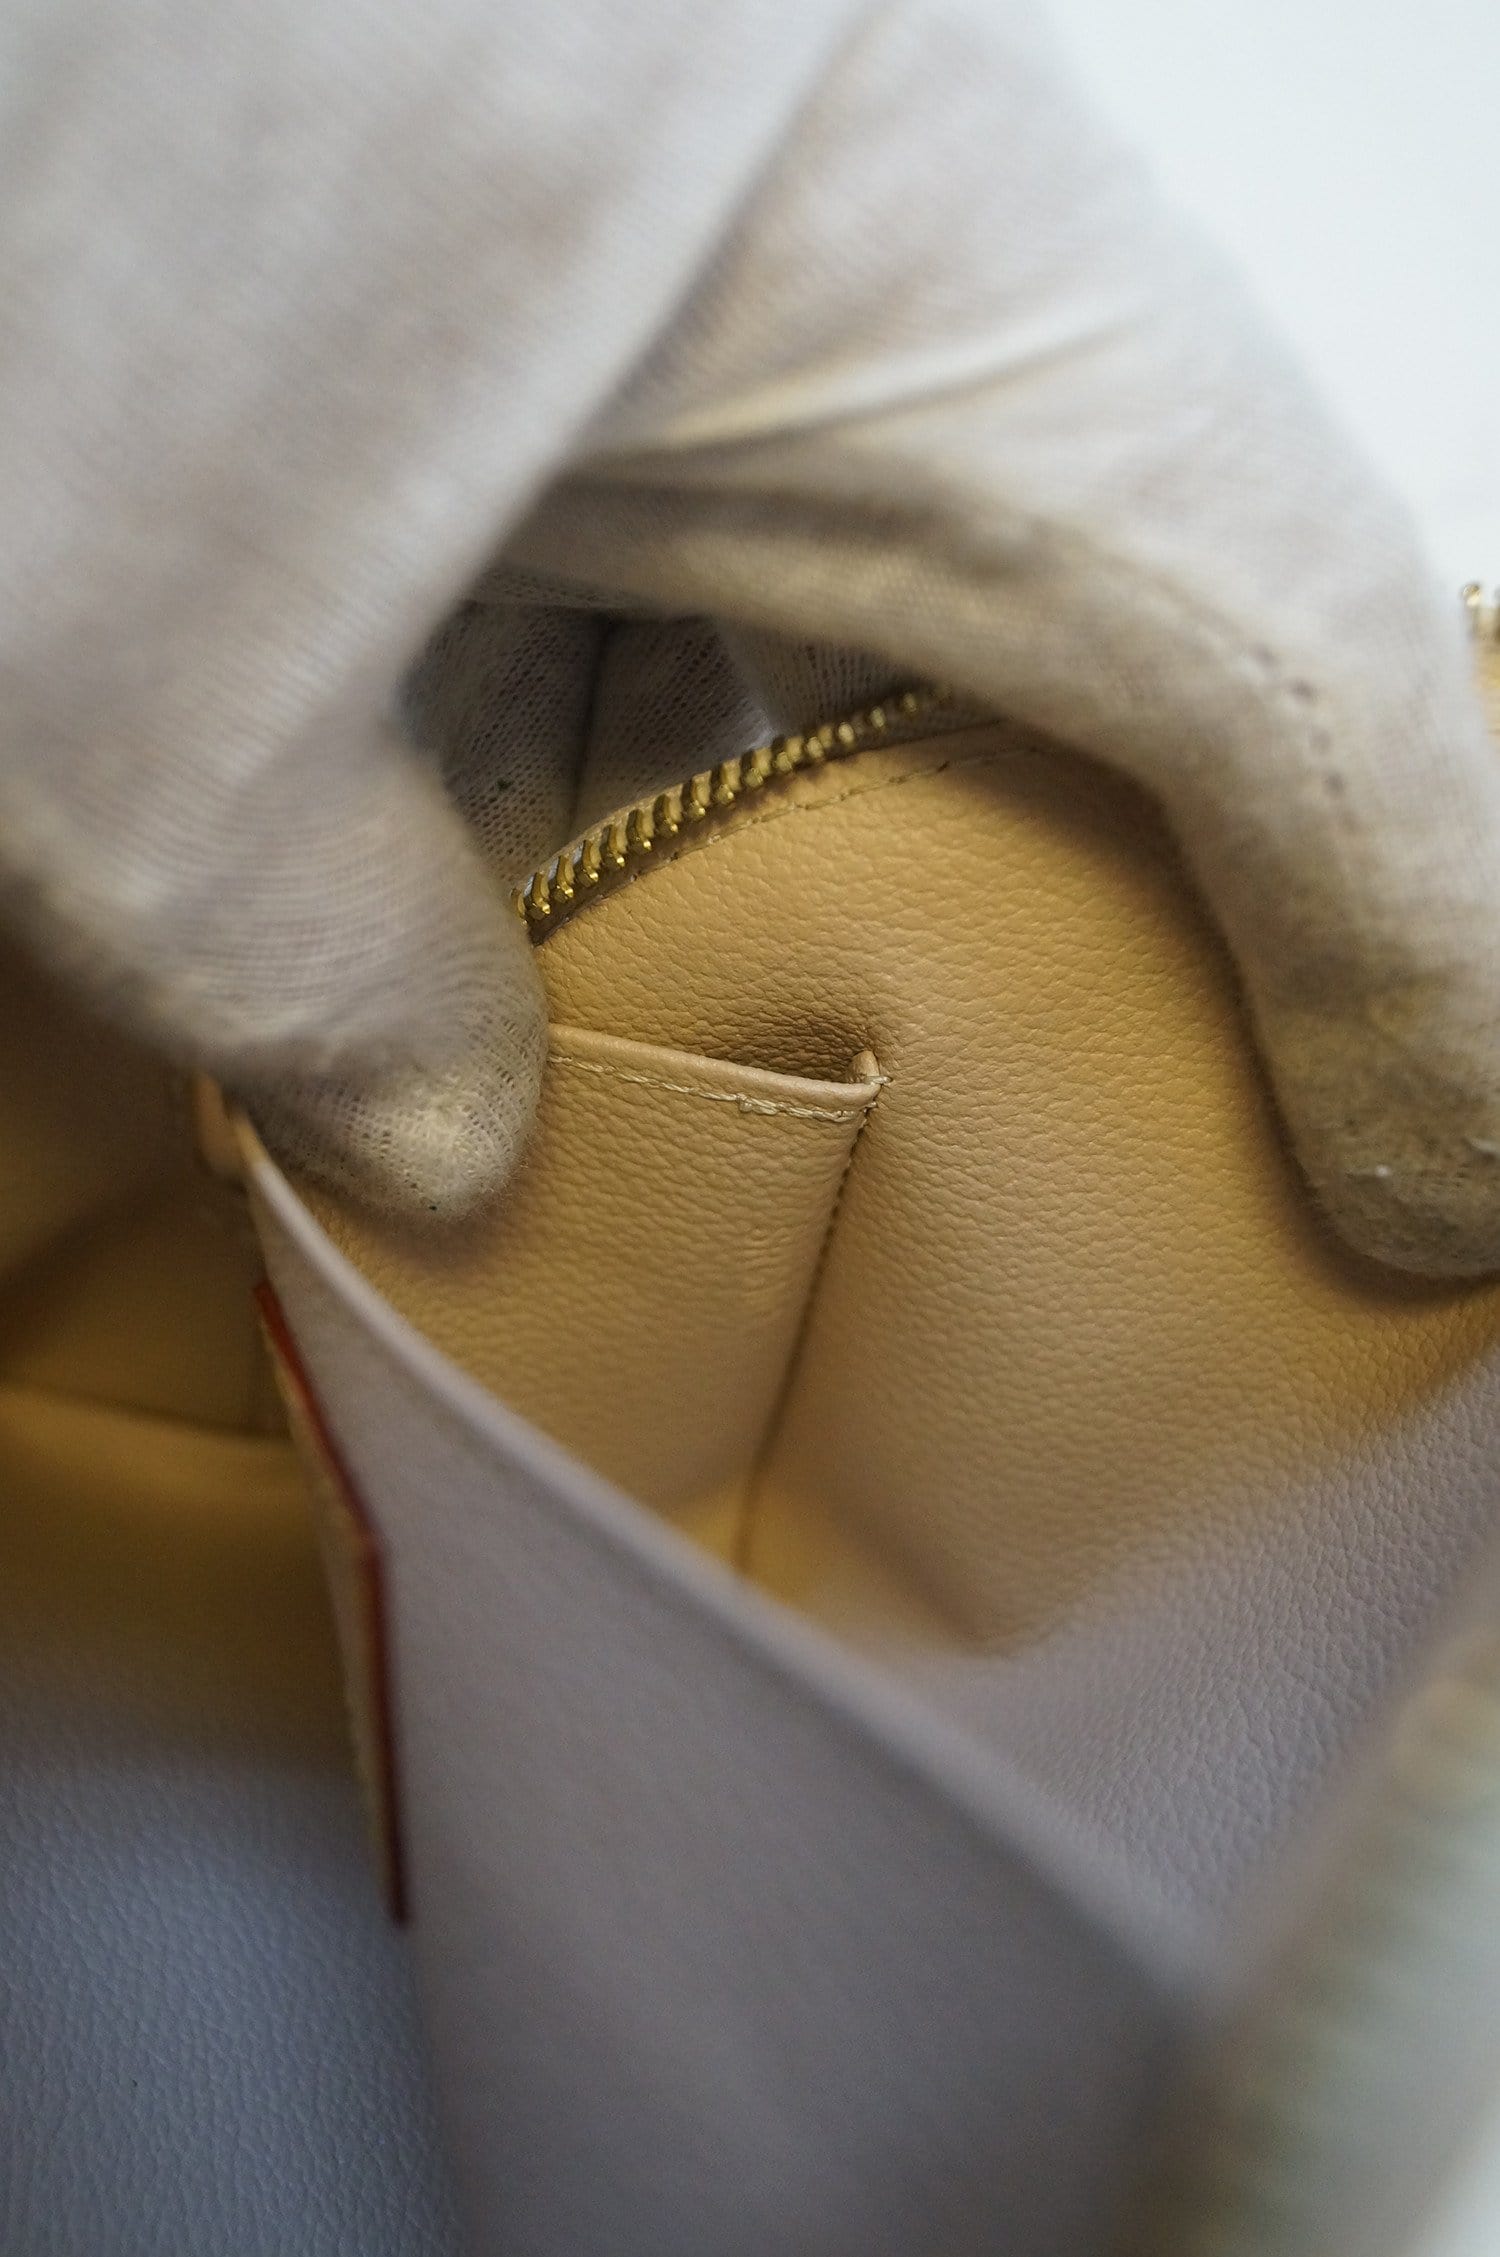 Louis Vuitton (gold) Case – Brandgenics